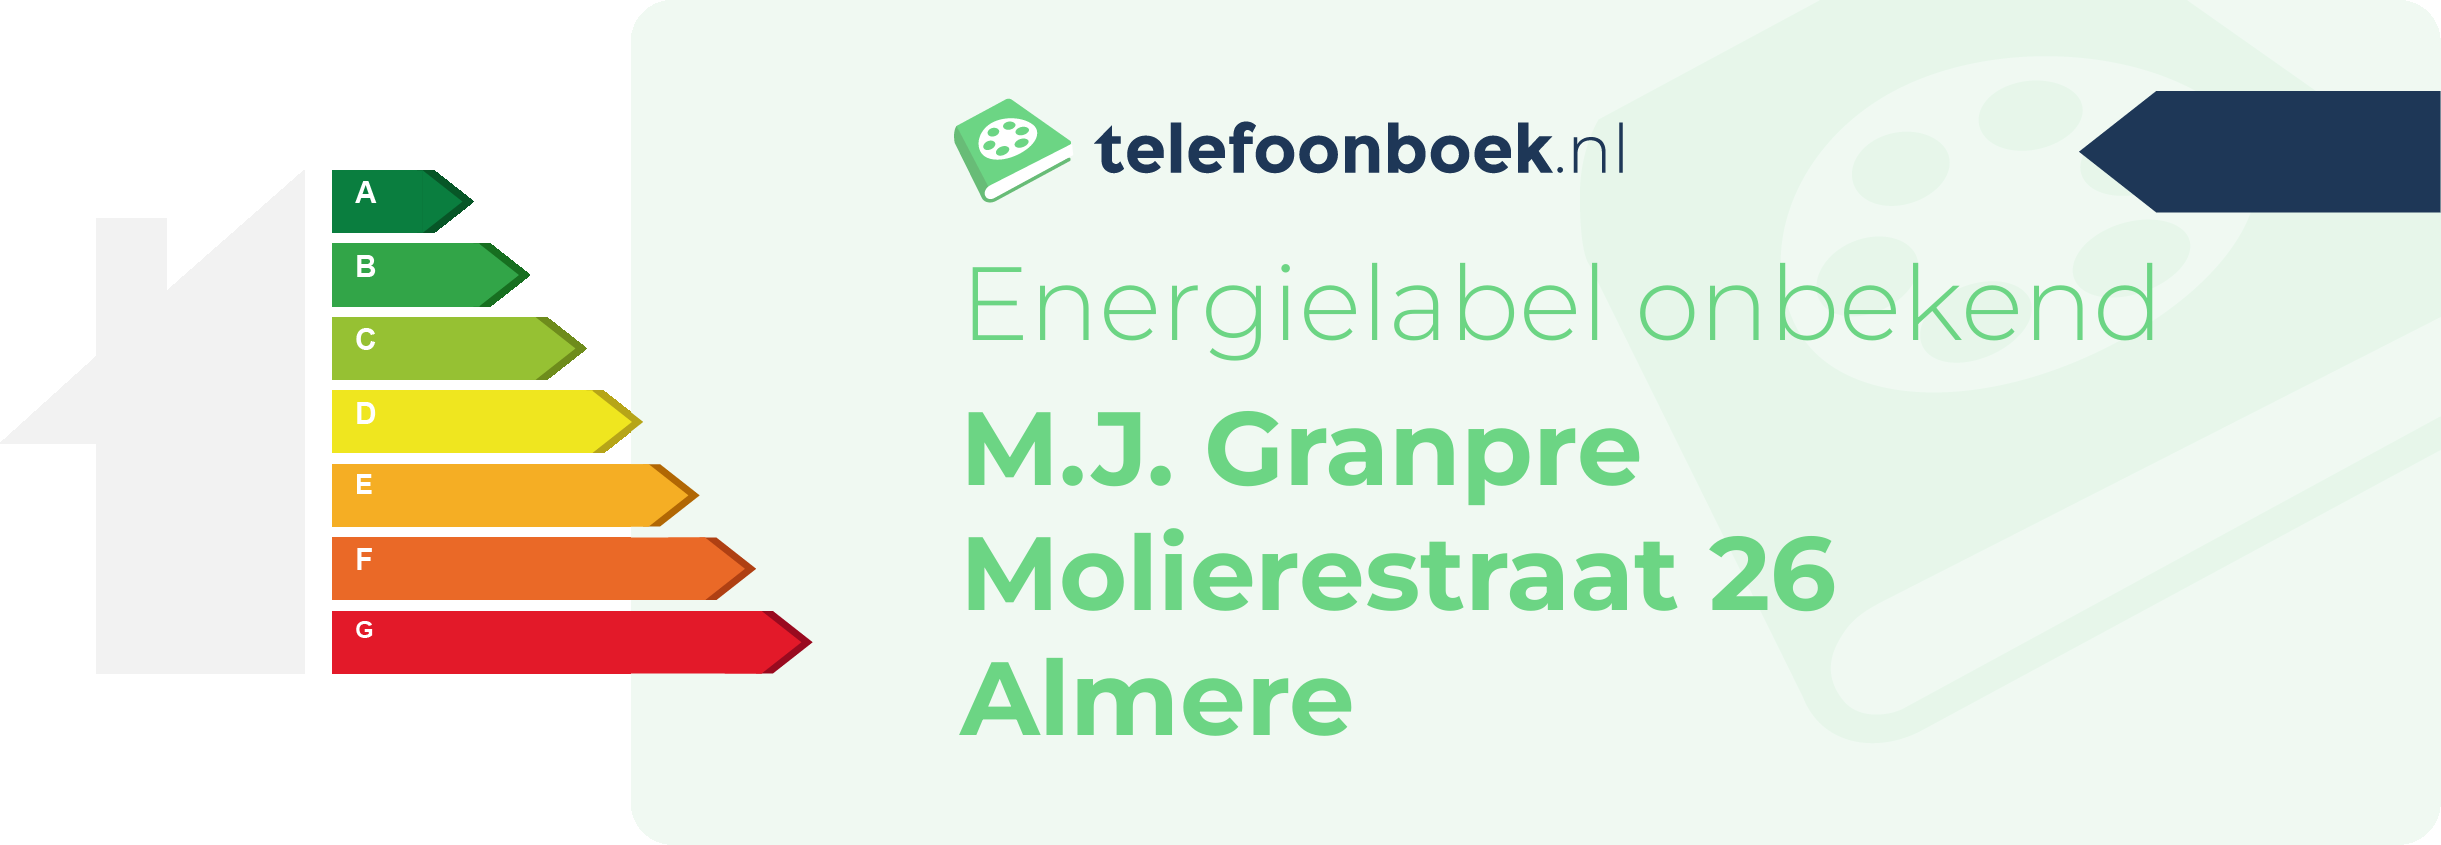 Energielabel M.J. Granpre Molierestraat 26 Almere